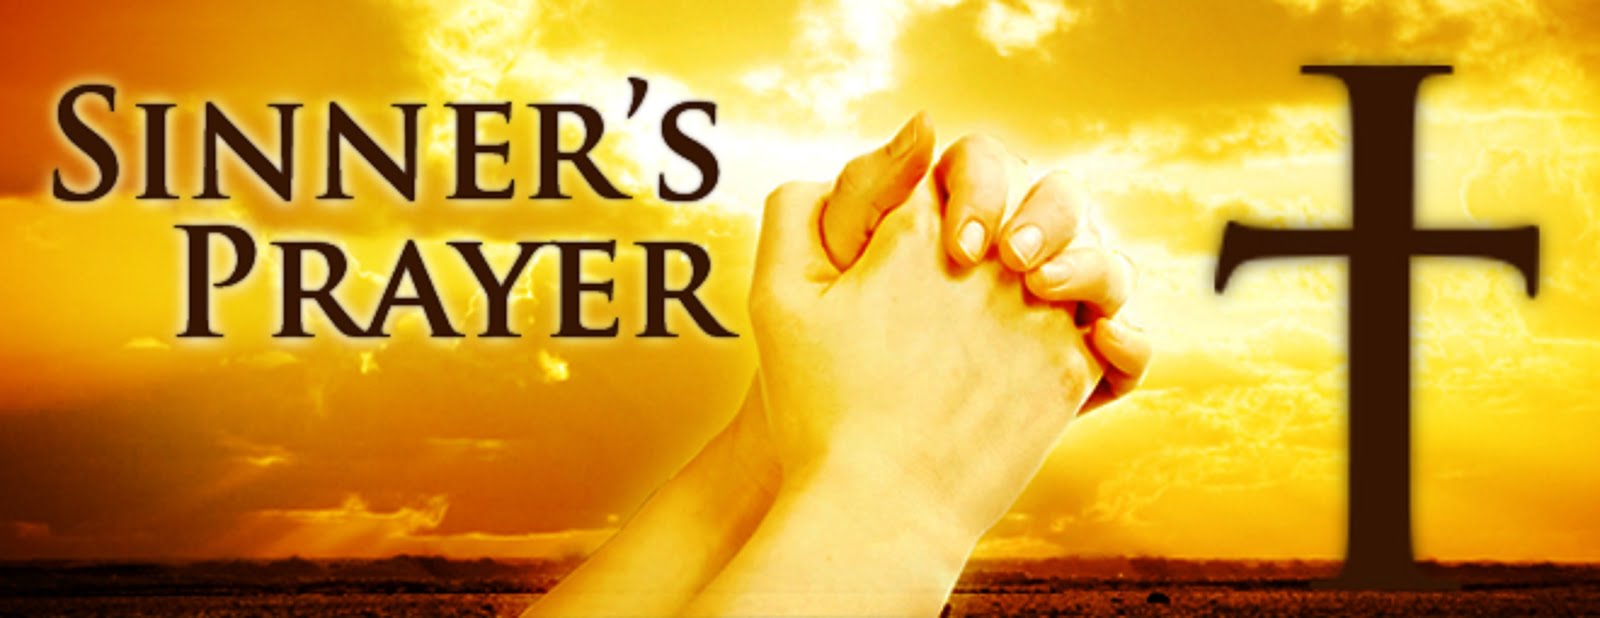 THE SINNERS PRAYER - FALSE DOCTRINE